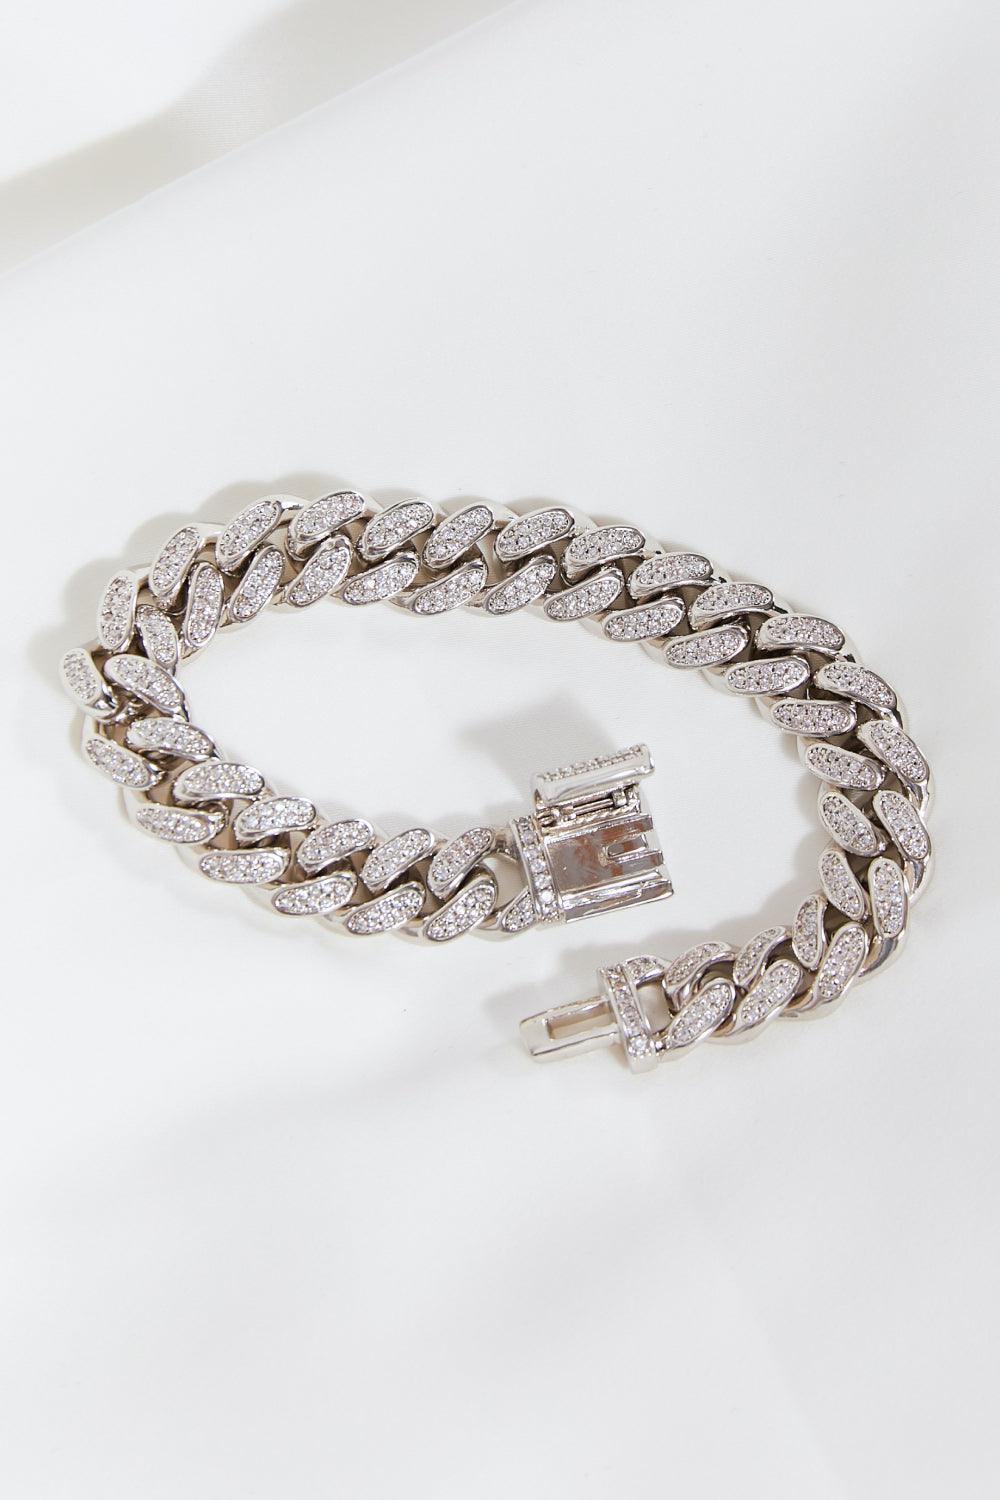 Bona Fide Fashion - Curb Chain Bracelet - Women Fashion - Bona Fide Fashion